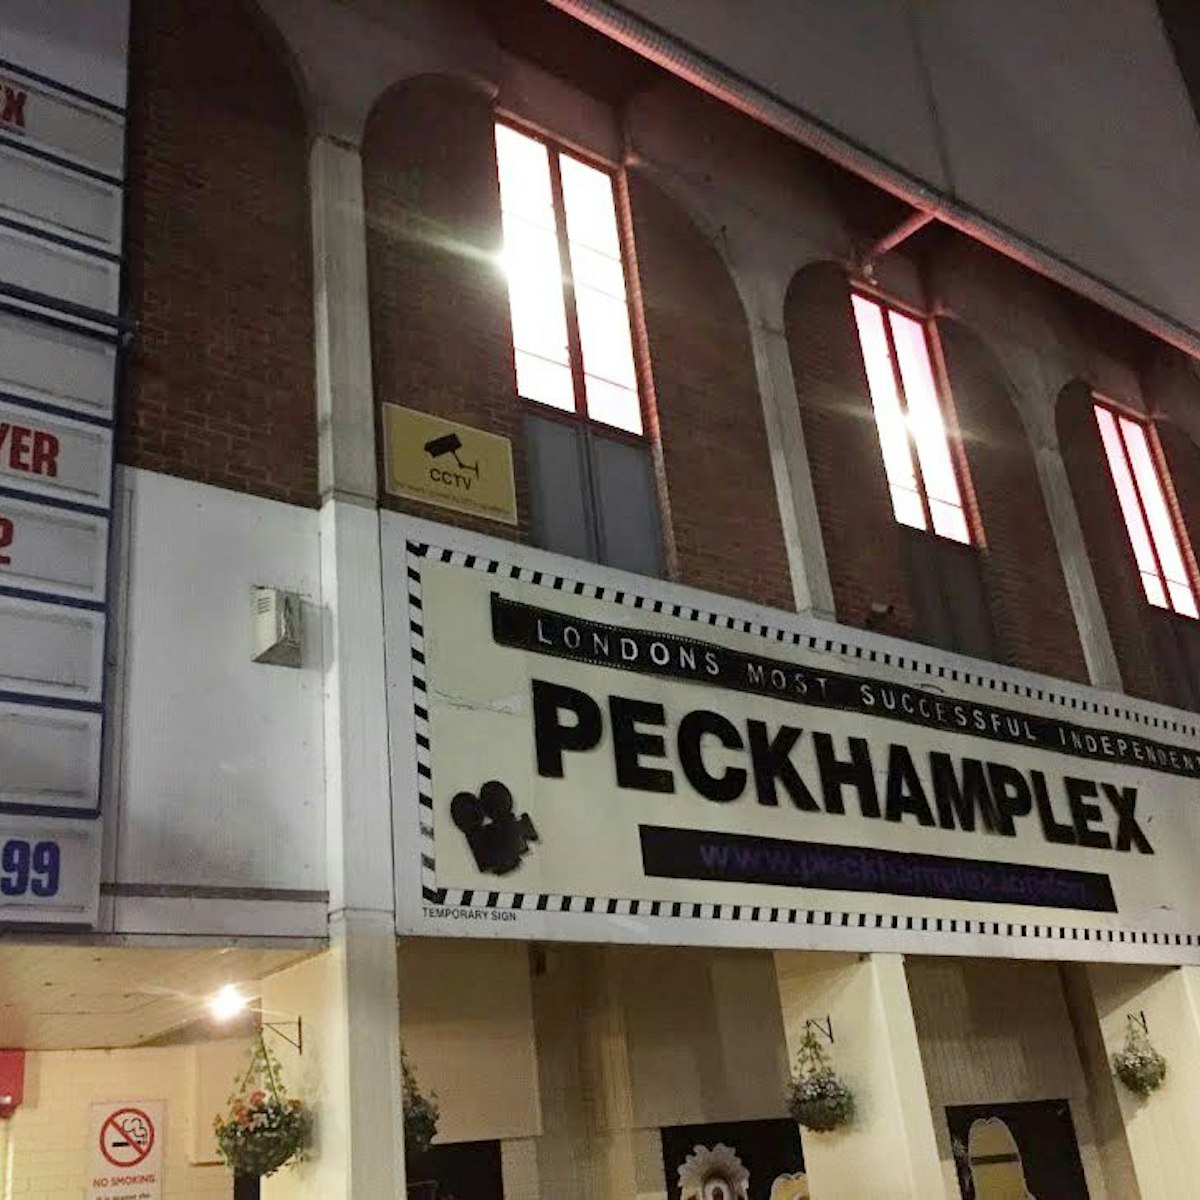 Outside Peckhamplex, a budget cinema in Peckham, South London